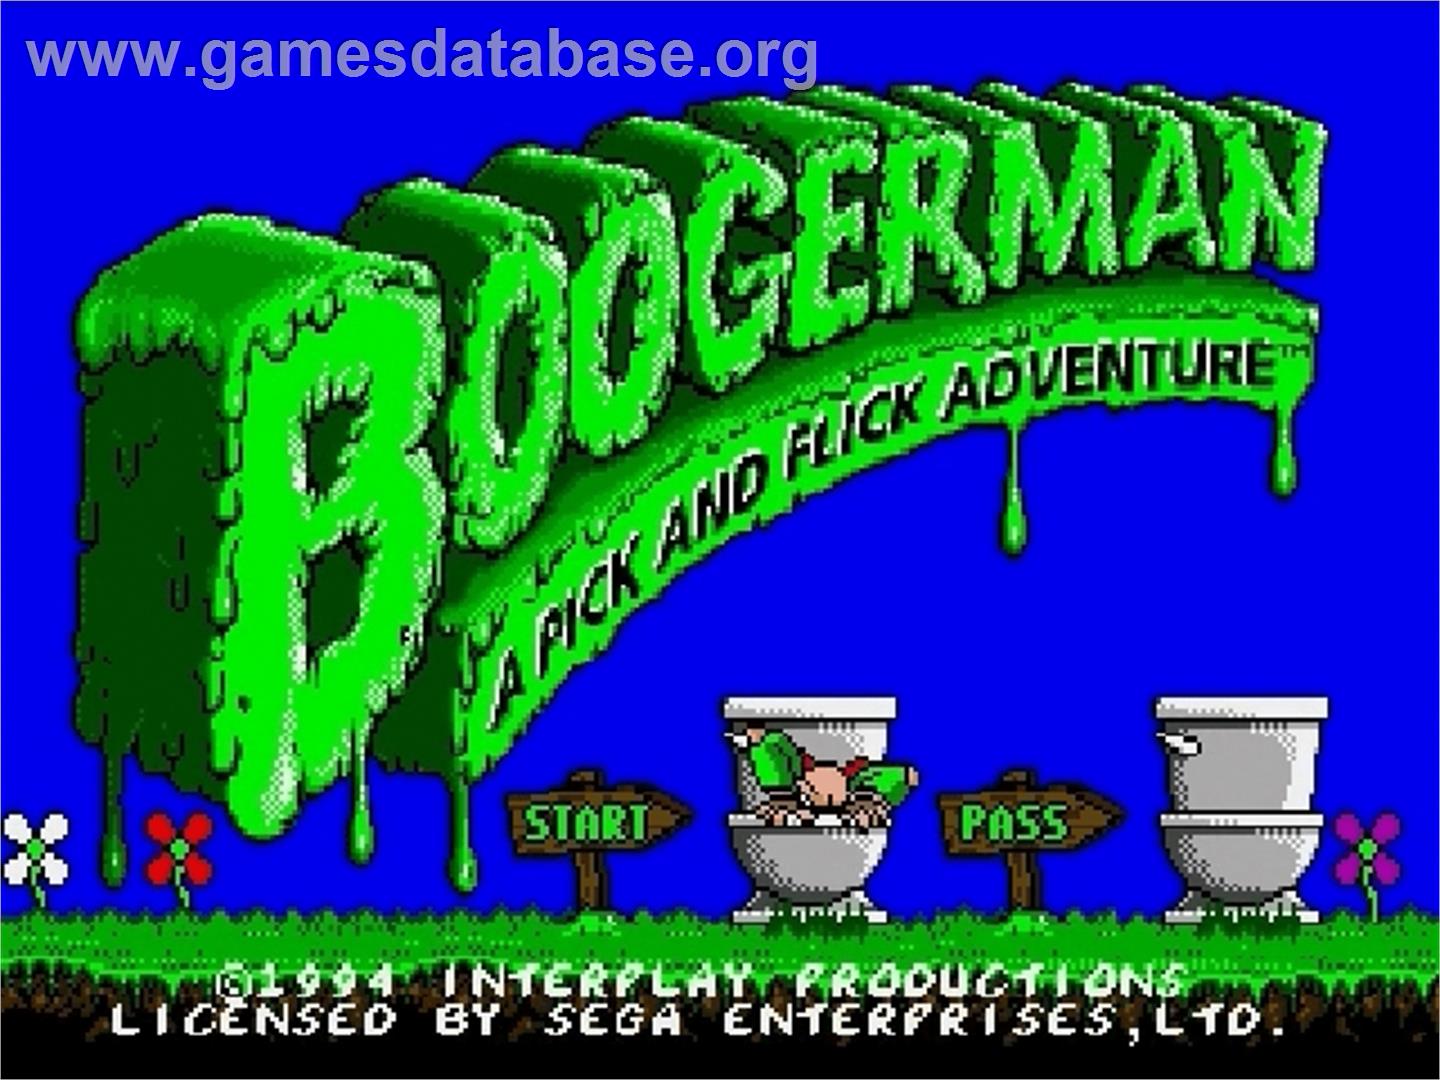 Boogerman: A Pick and Flick Adventure - Sega Genesis - Artwork - Title Screen